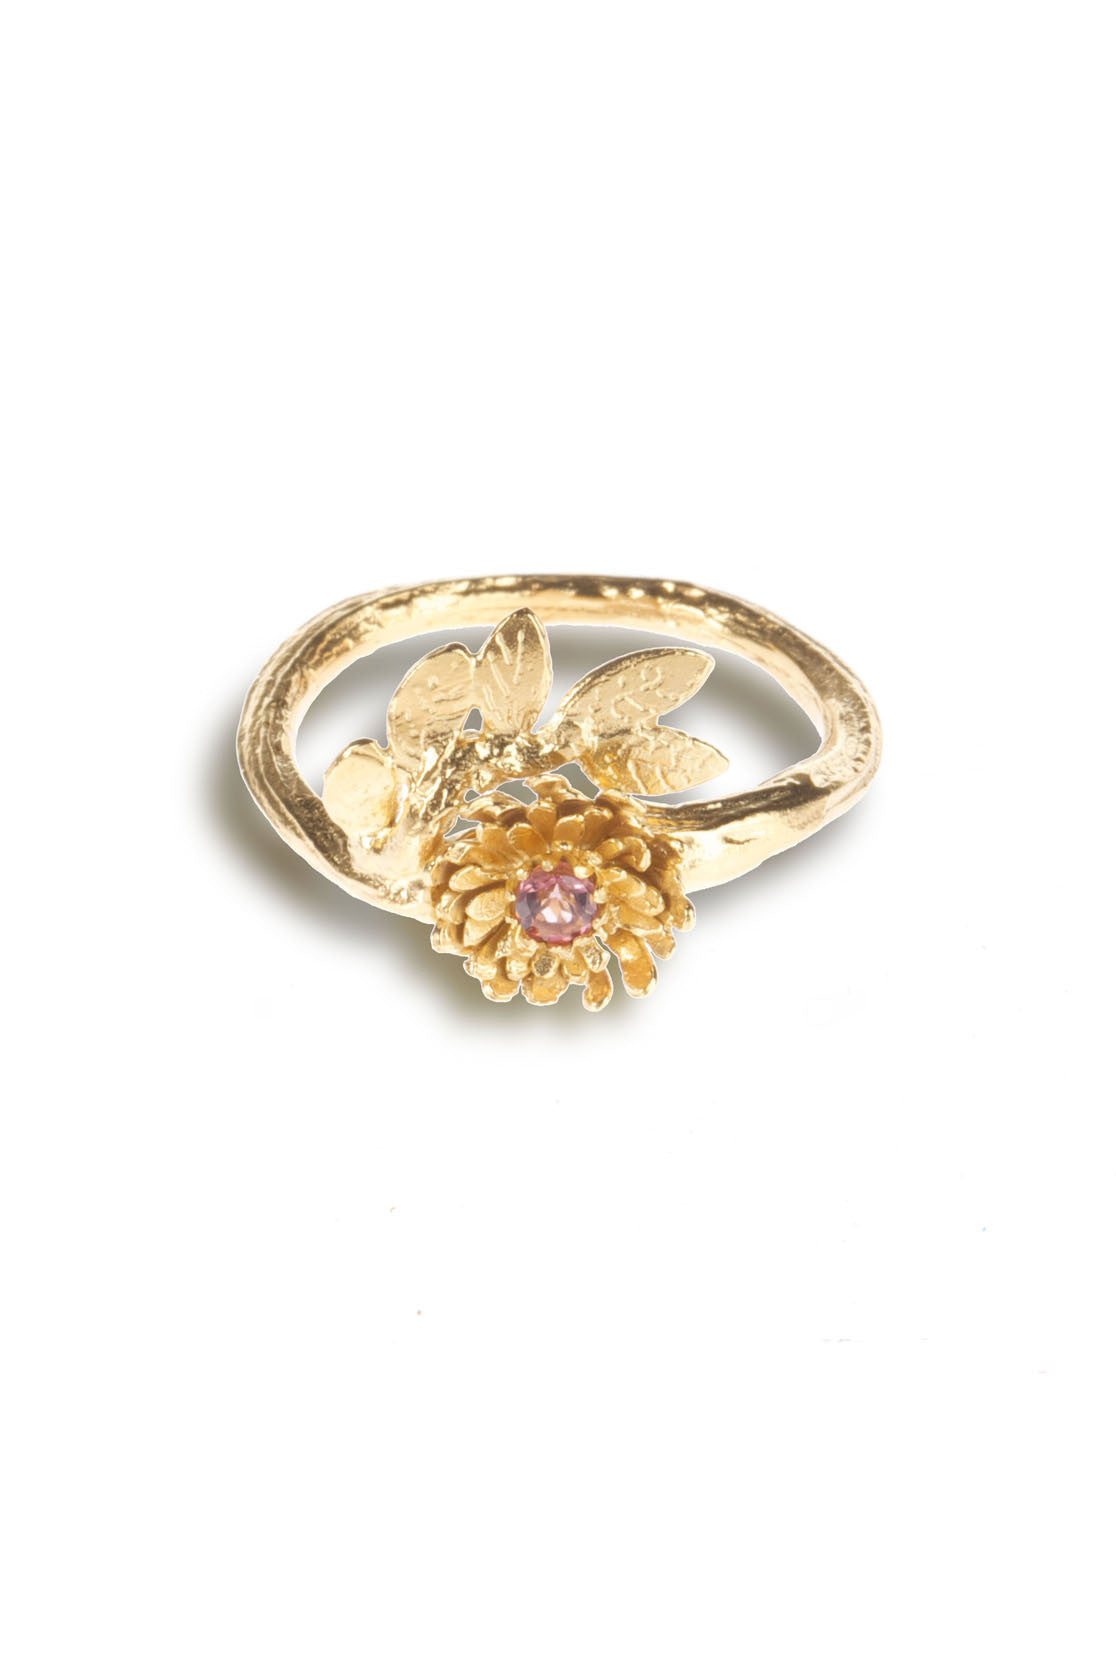 Handmade gold dahlia ring